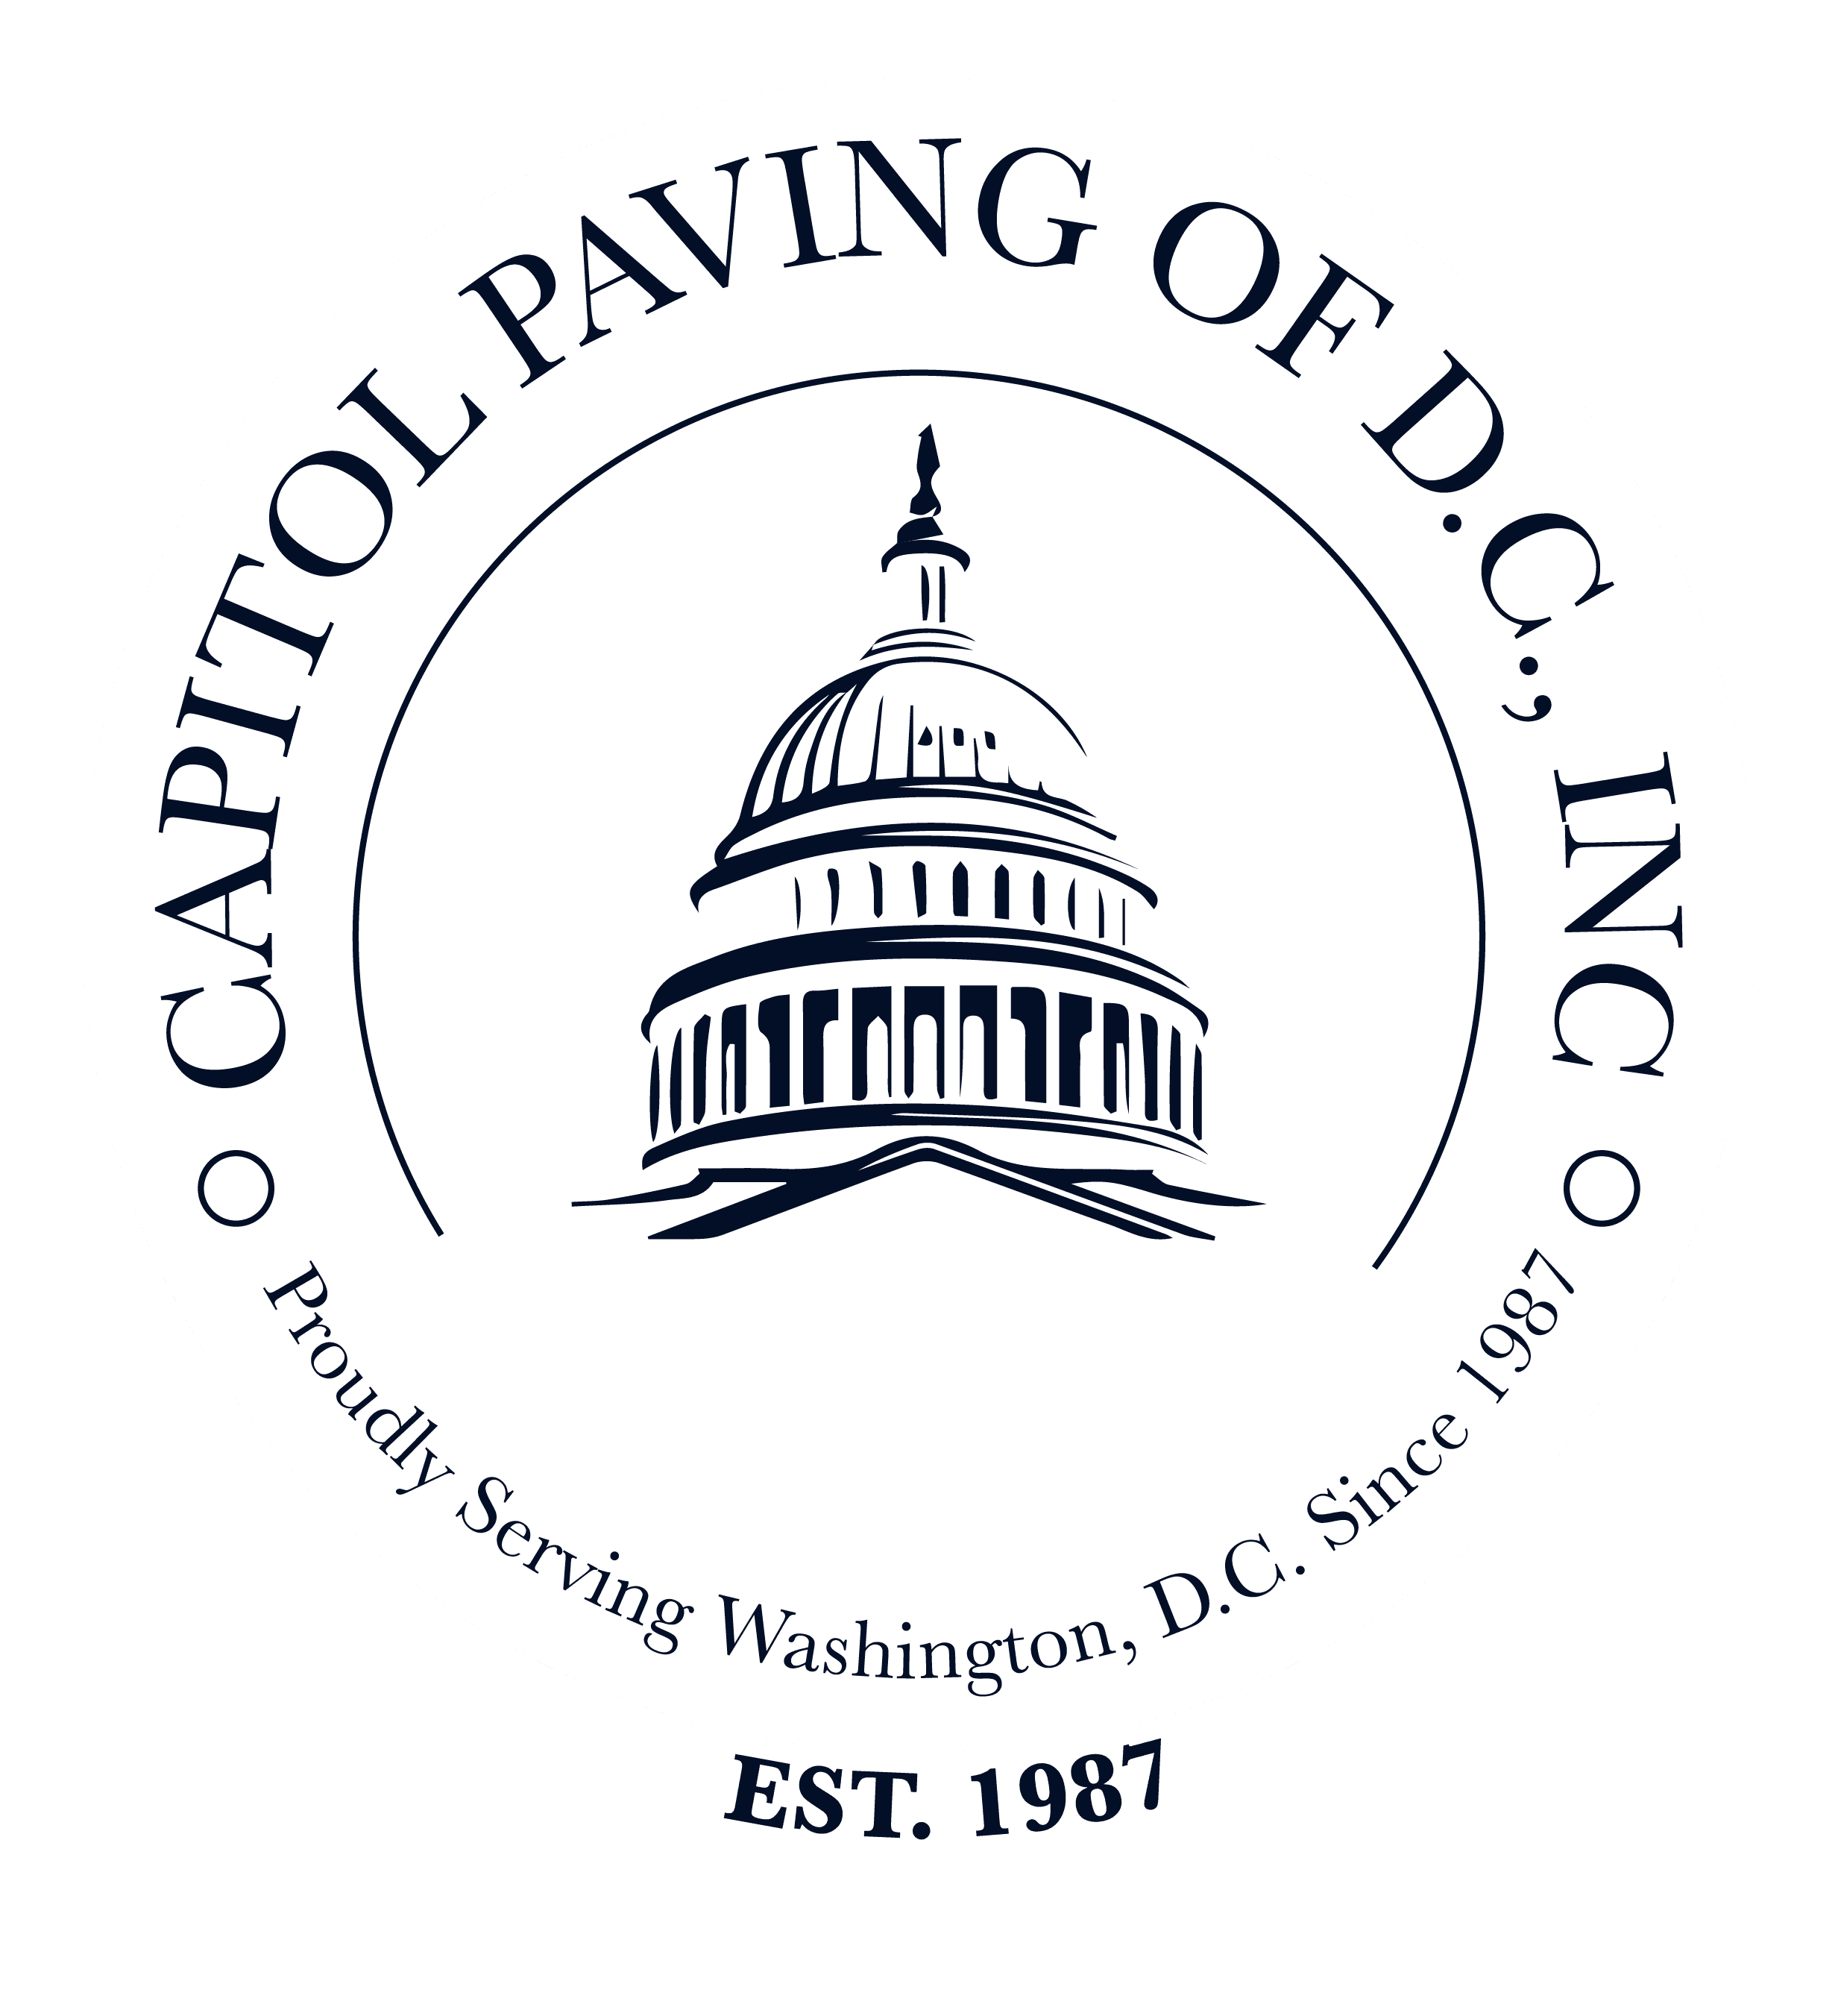 CAPITOL PAVING OF D.C., INC.